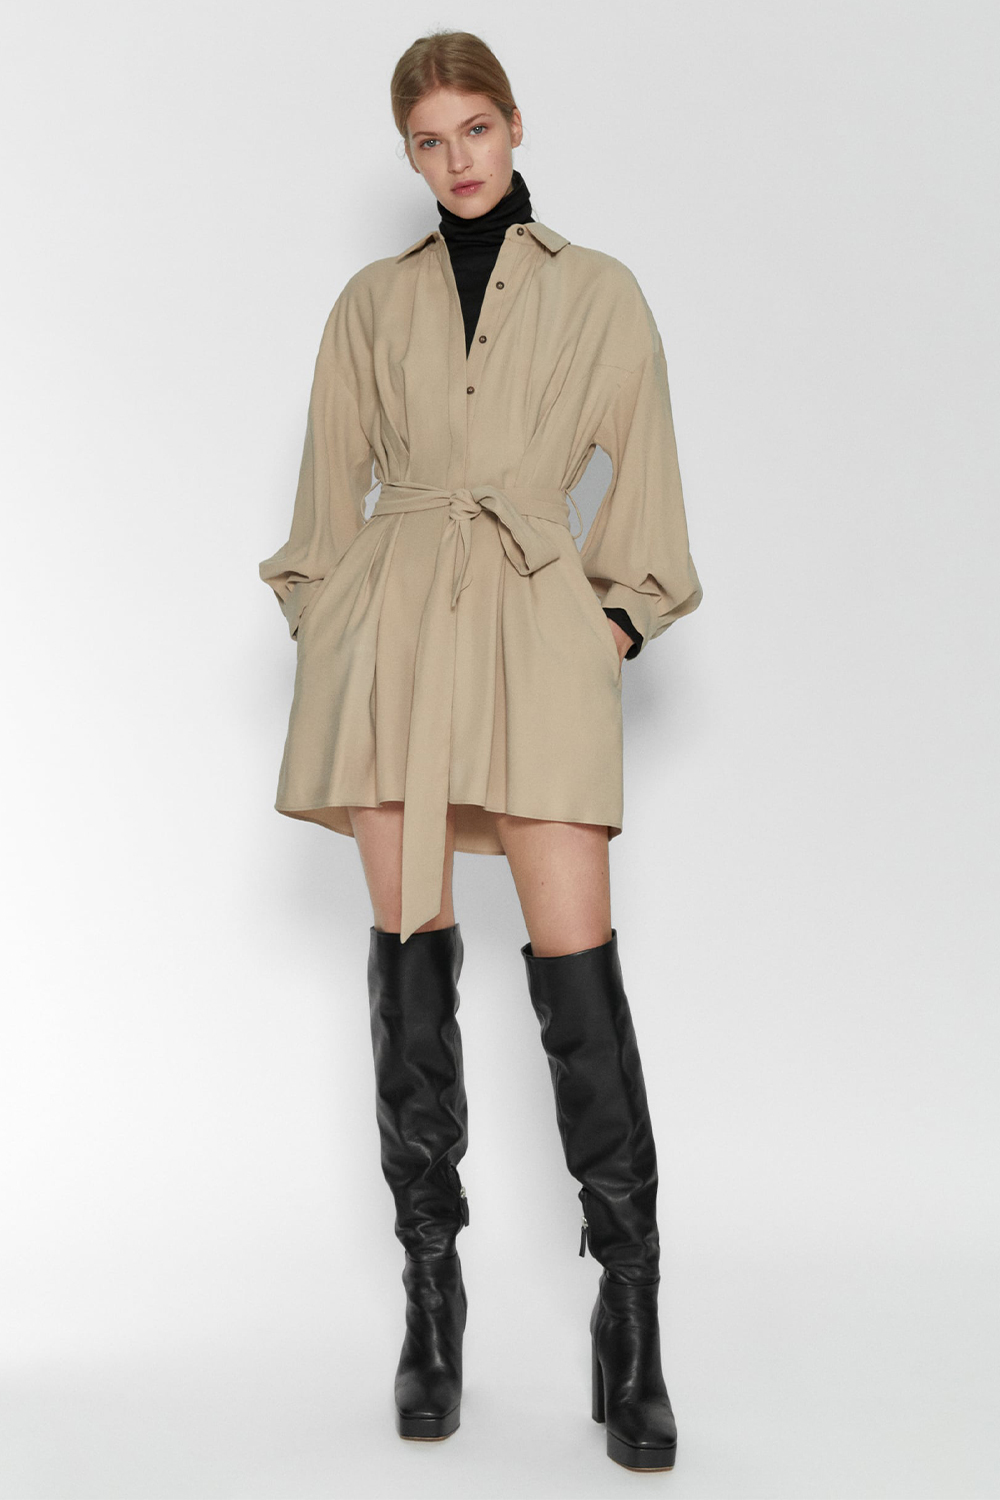 Zara Outfit Ideas: Beige Dress and Roll Neck Jumper